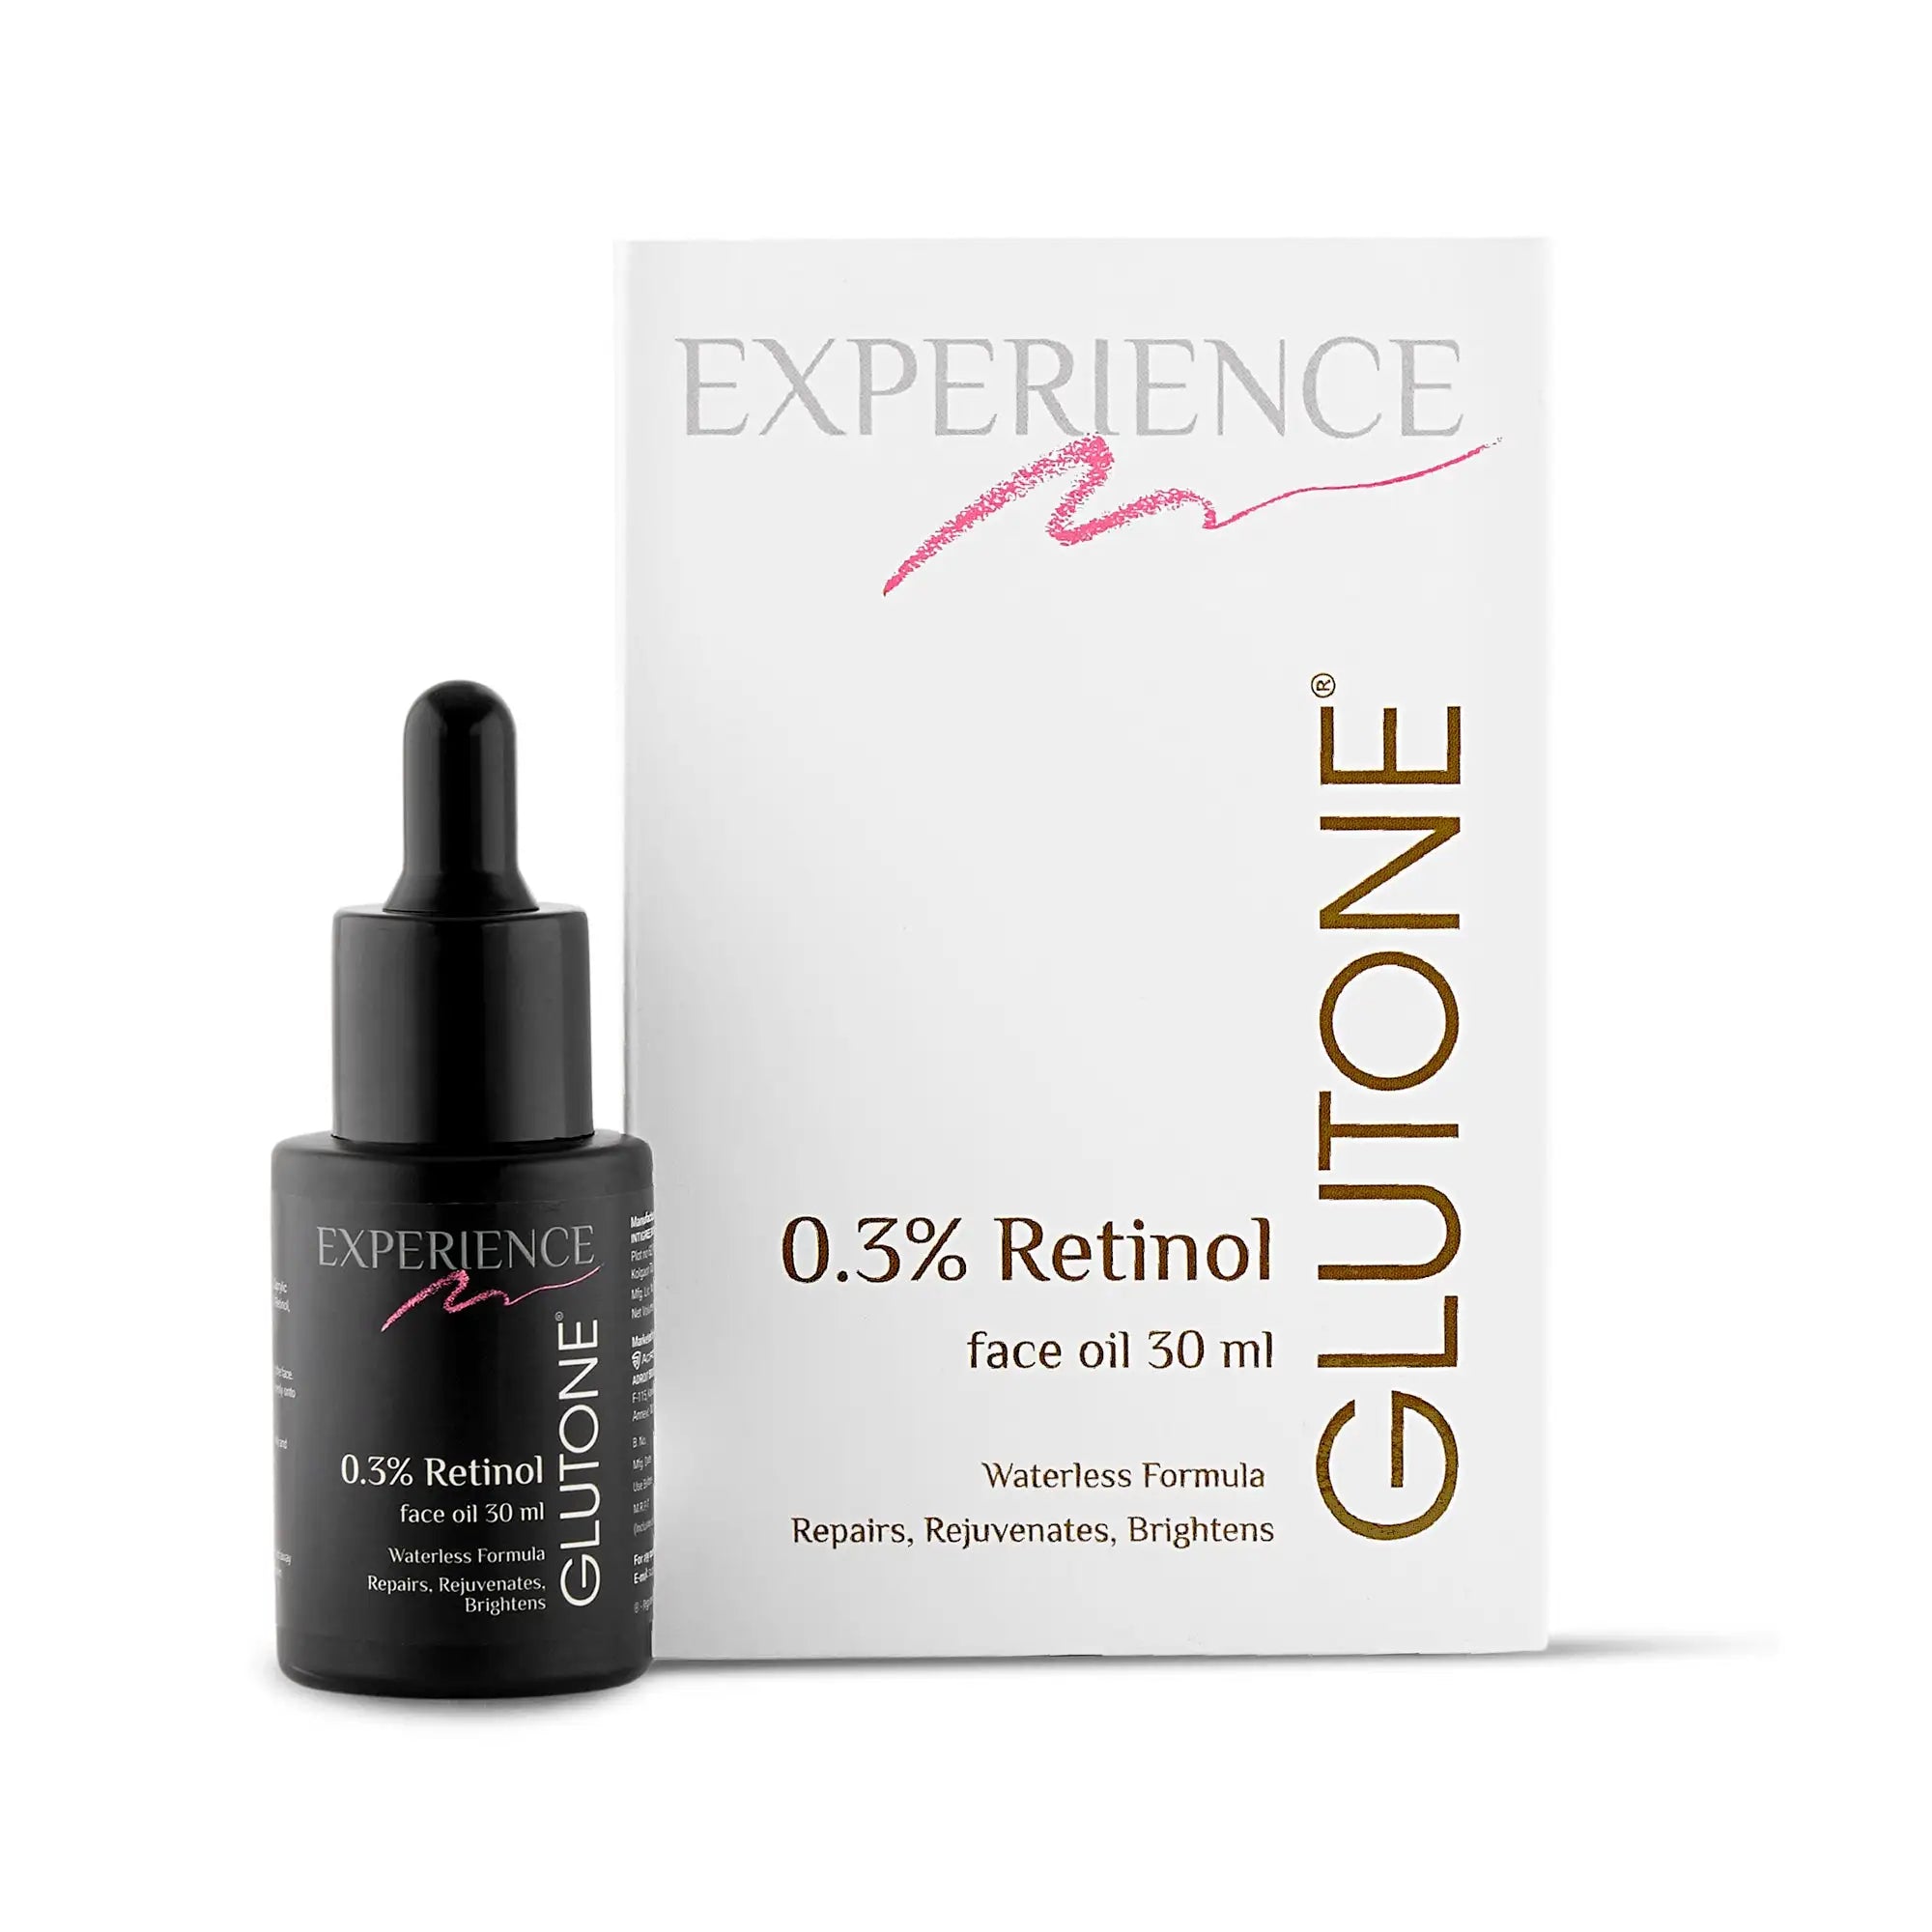 Glutone 0.3% Retinol Oil I 30 ml I Glow | Radiance | Wrinkle Smoothening | Tightens Pores